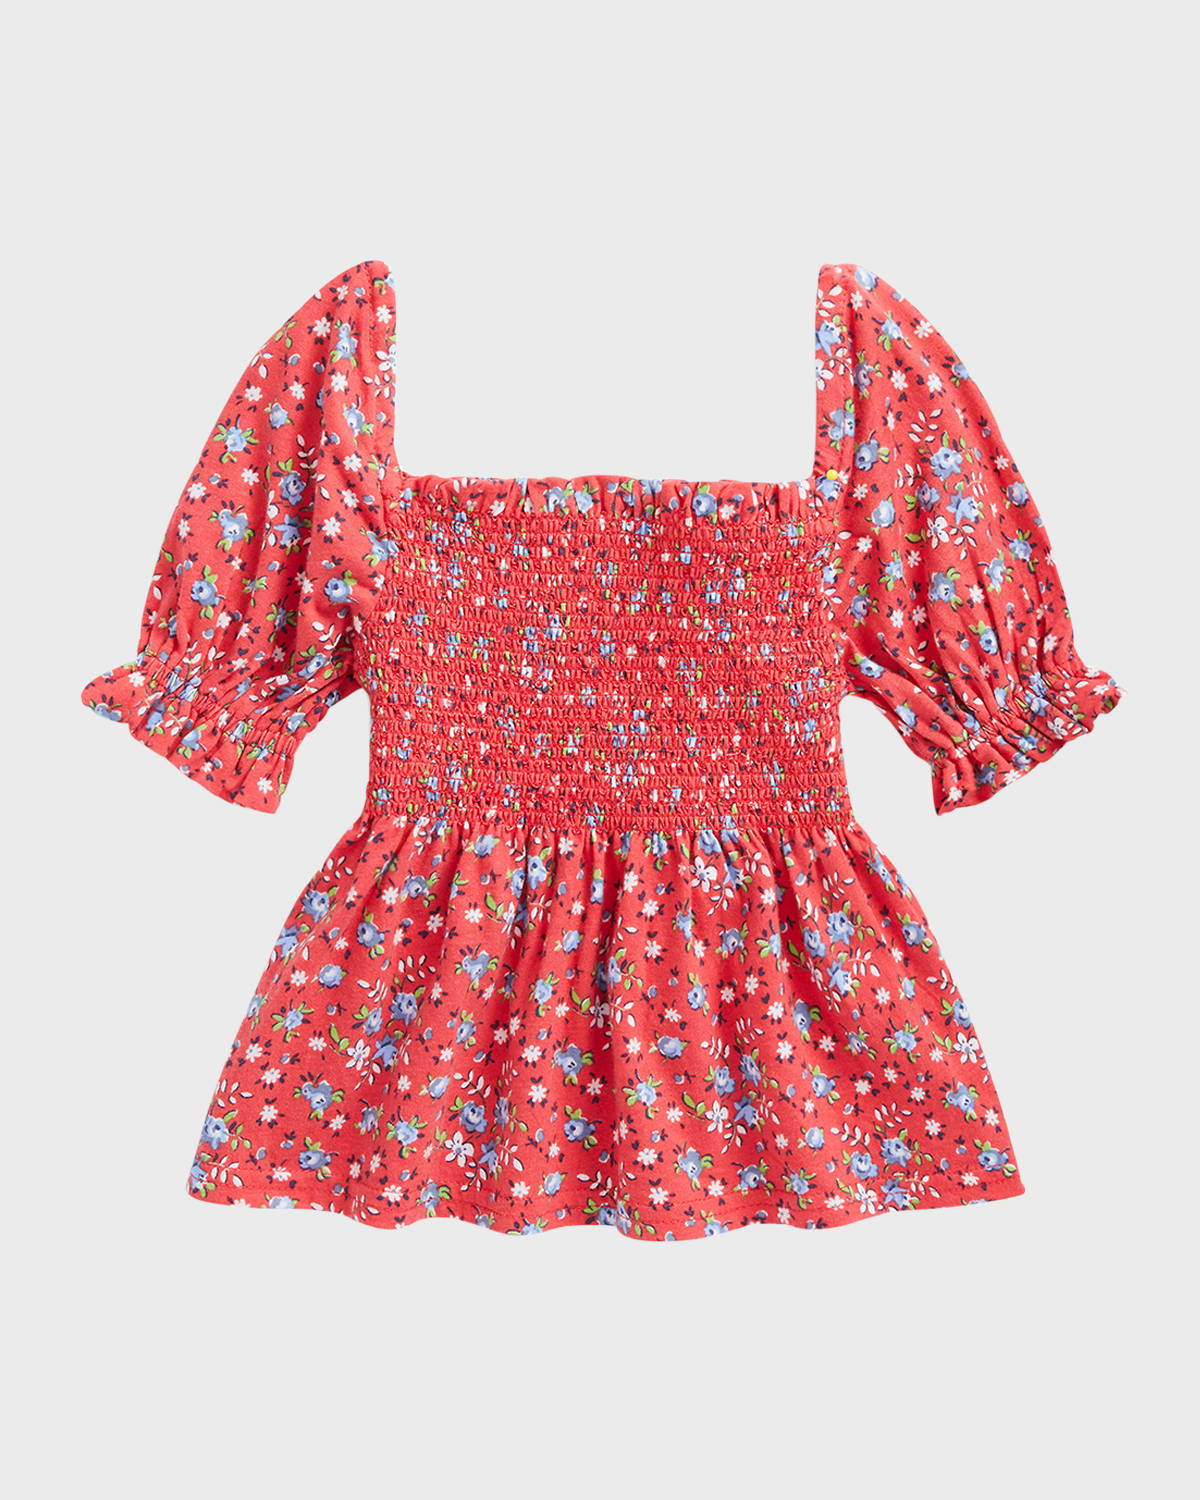 Ralph Lauren Childrenswear Girl's Smocked Floral-Print Top, Size 4-6X |  Neiman Marcus